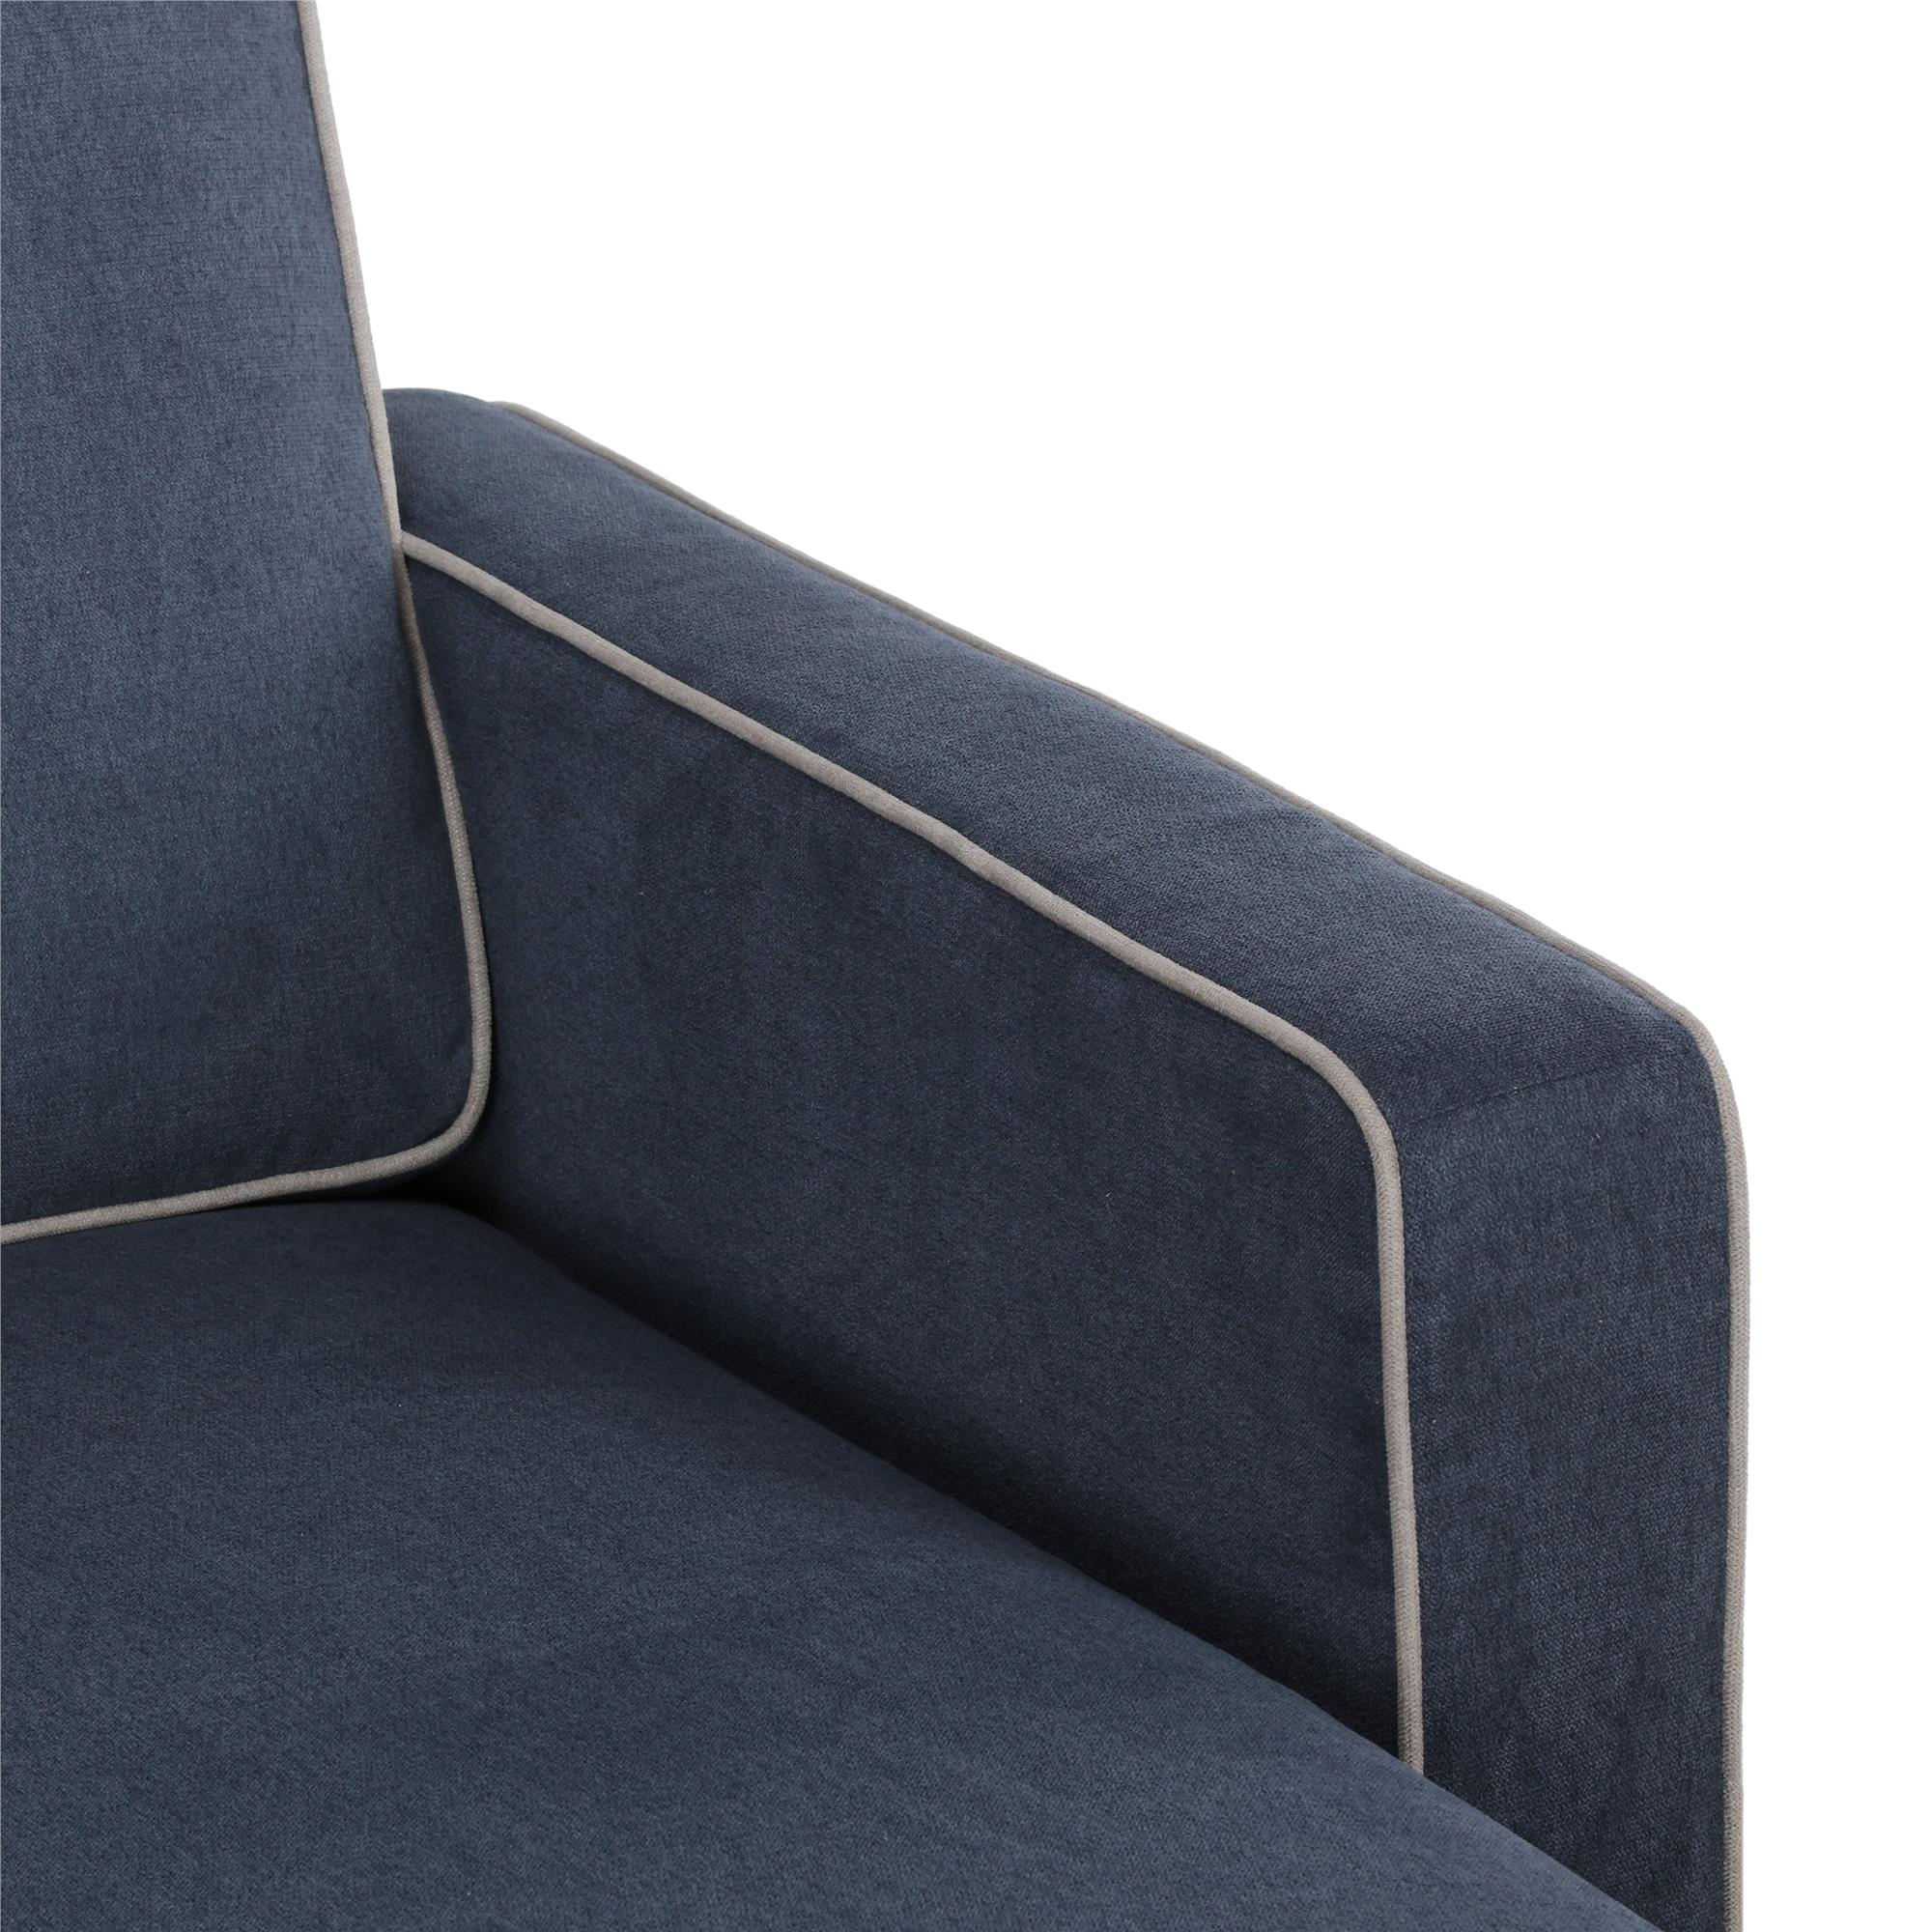 Novogratz Bowen Sectional Sofa with Contrast Welting, Blue, (Blue) - image 4 of 10